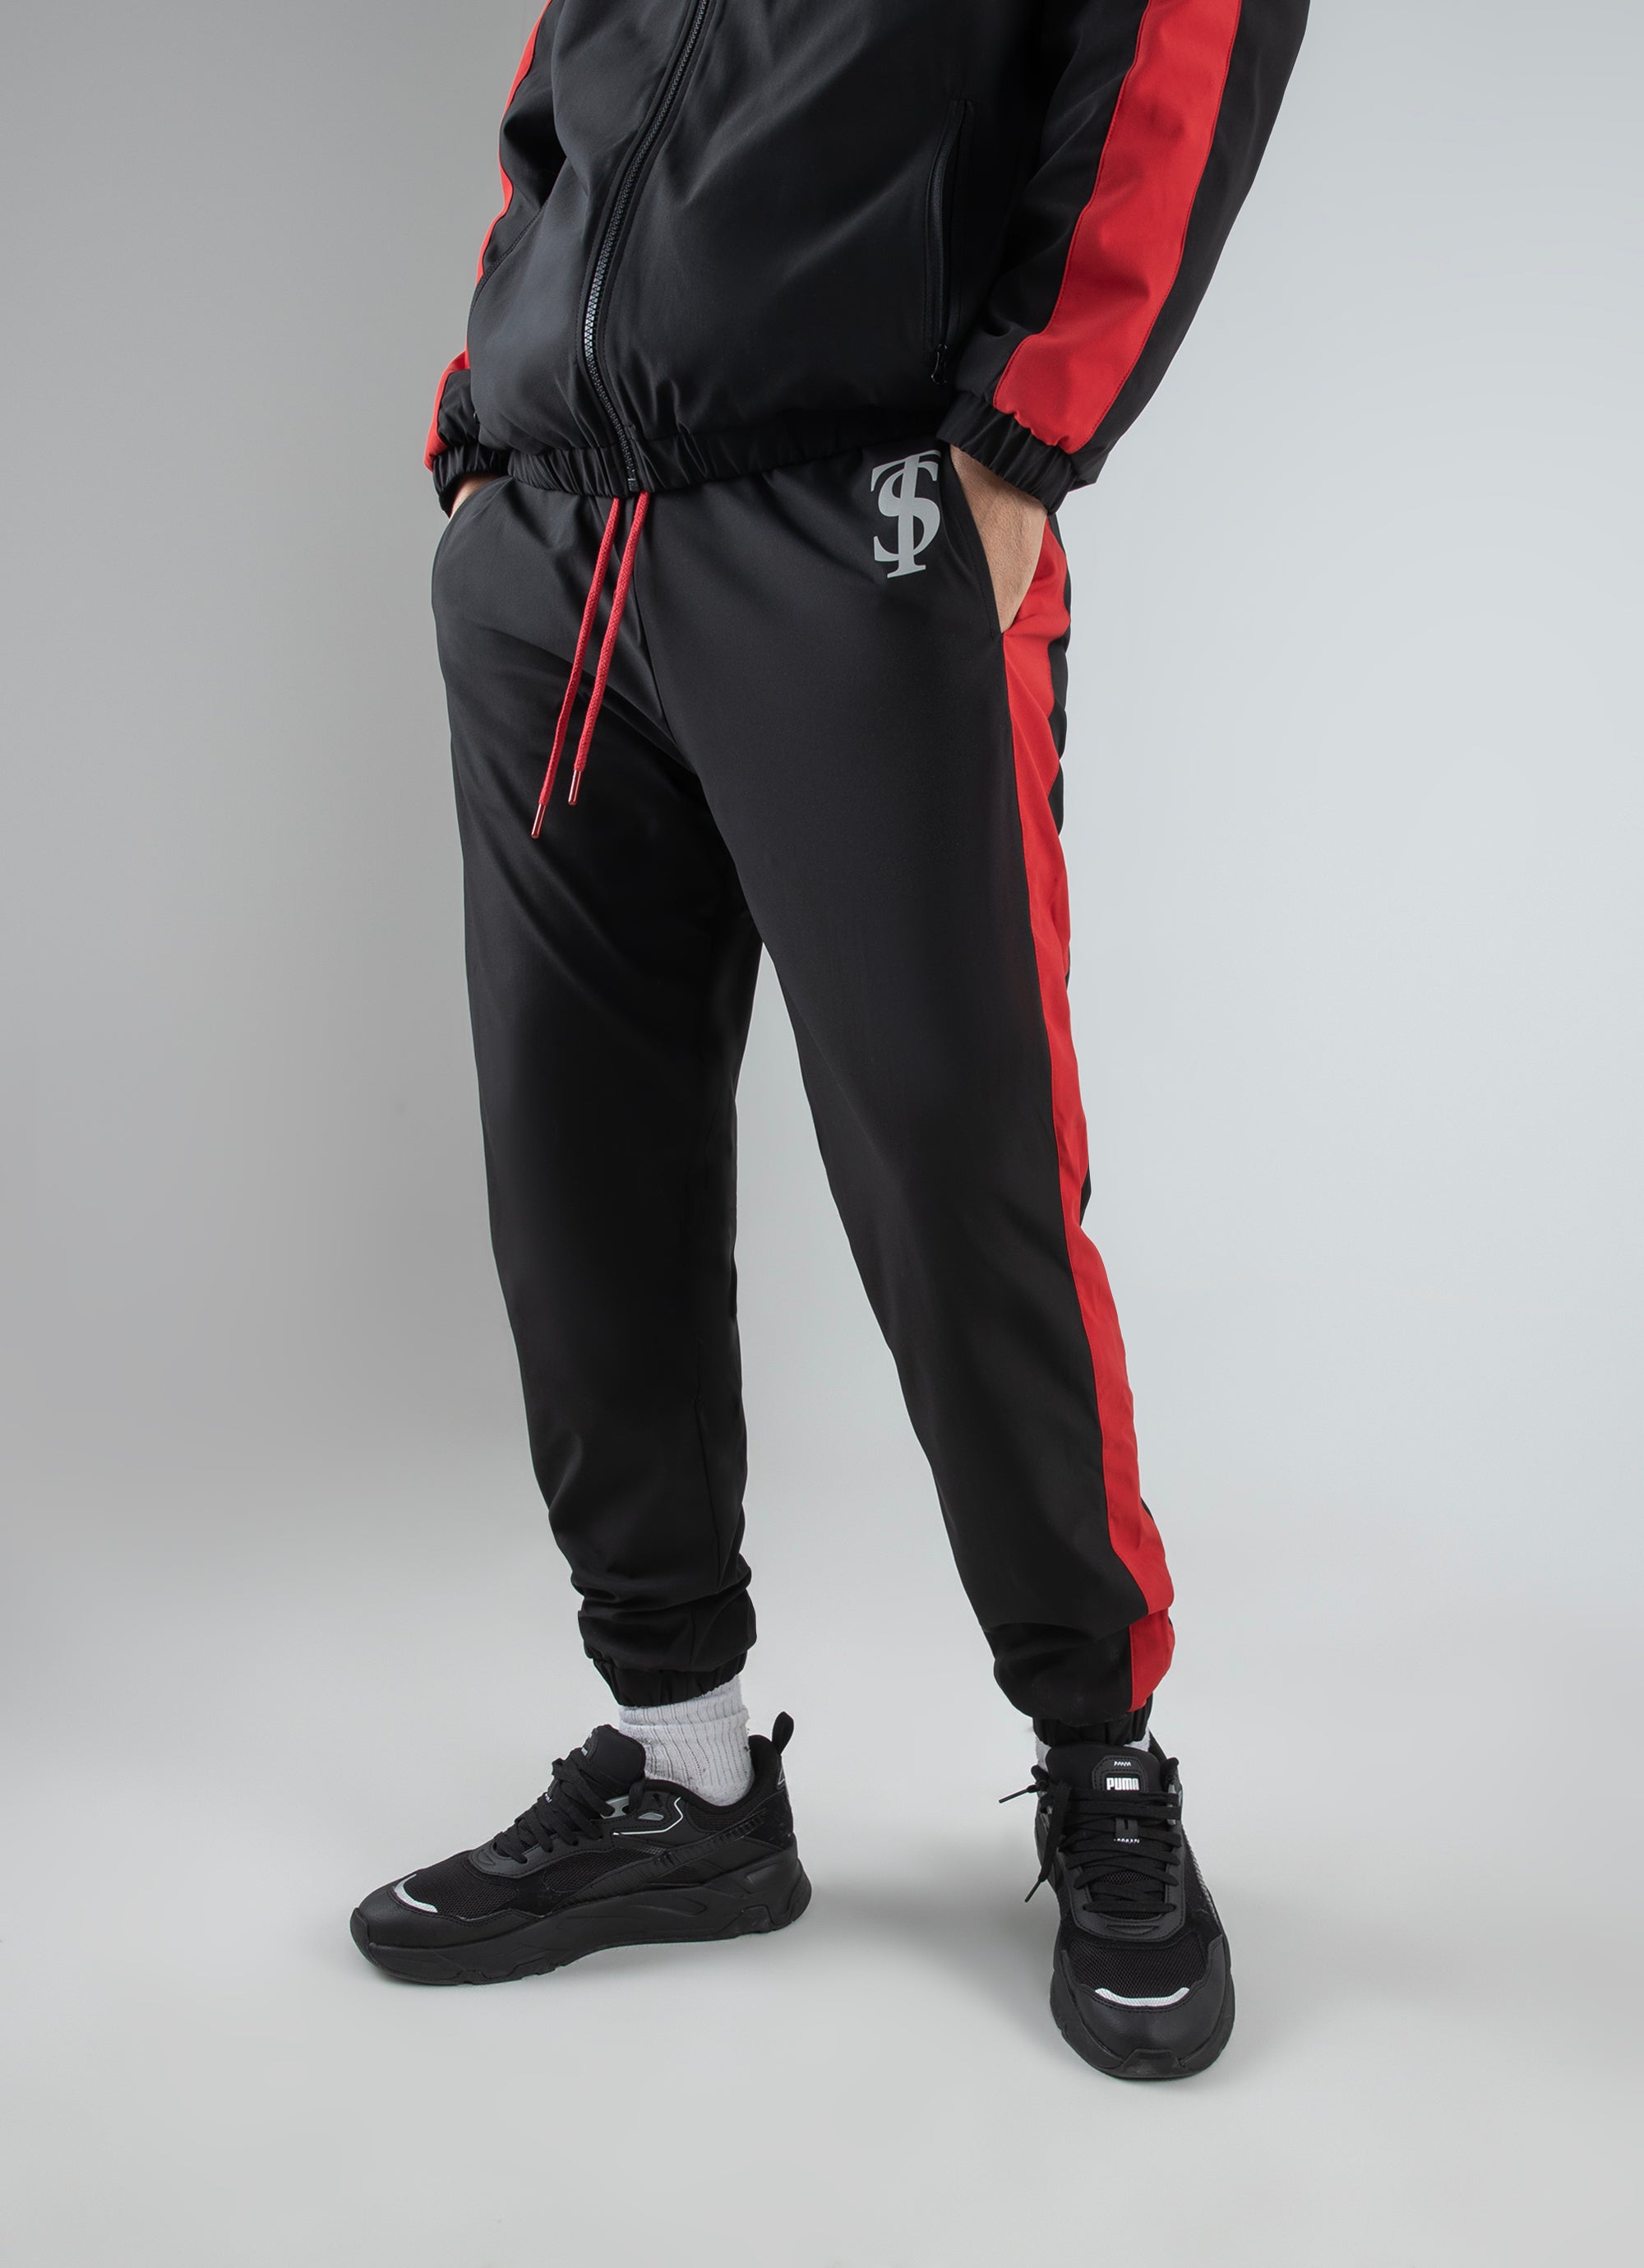 Mitchell & Ness Nba Chicago Bulls Champion Sweatpants in Black